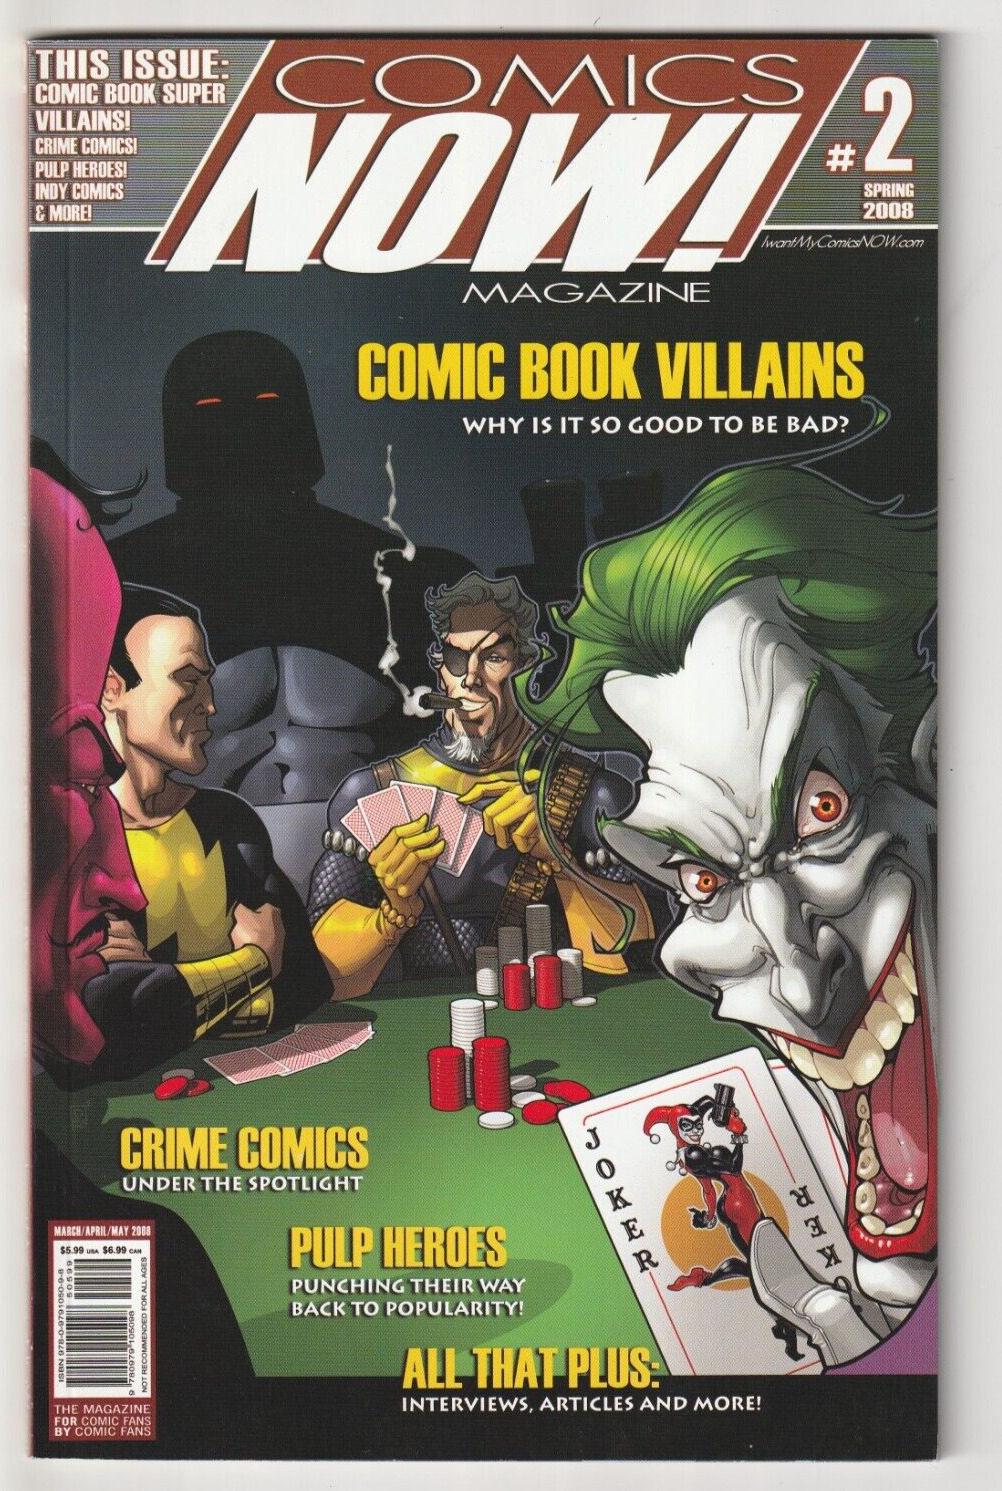 COMICS NOW MAGAZINE # 2 2008 THE VILLAINS PULP HEROES CRIME COMICS LUKE CAGE